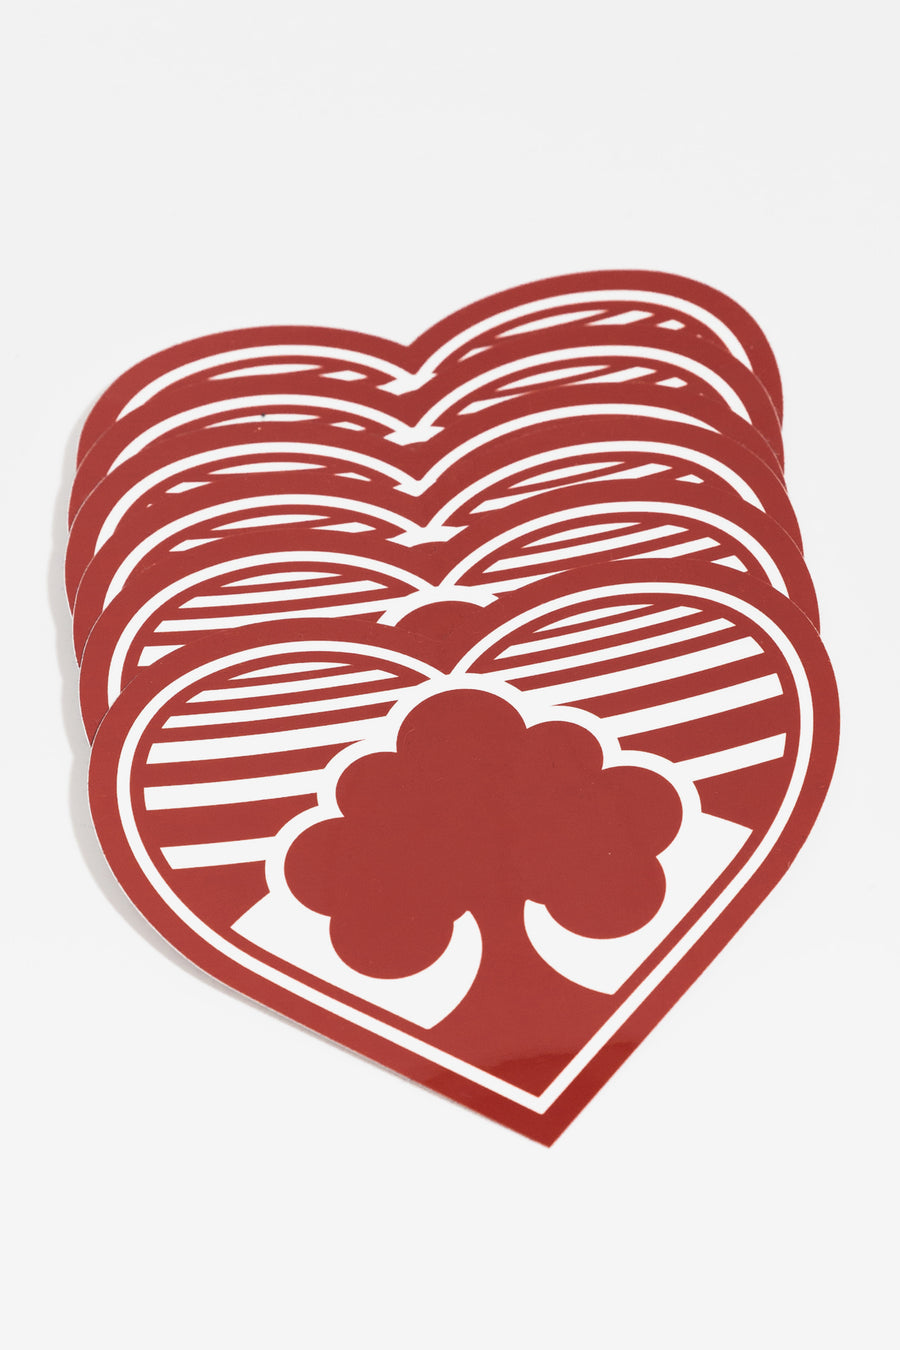 Big Heart Tree Sticker Decal